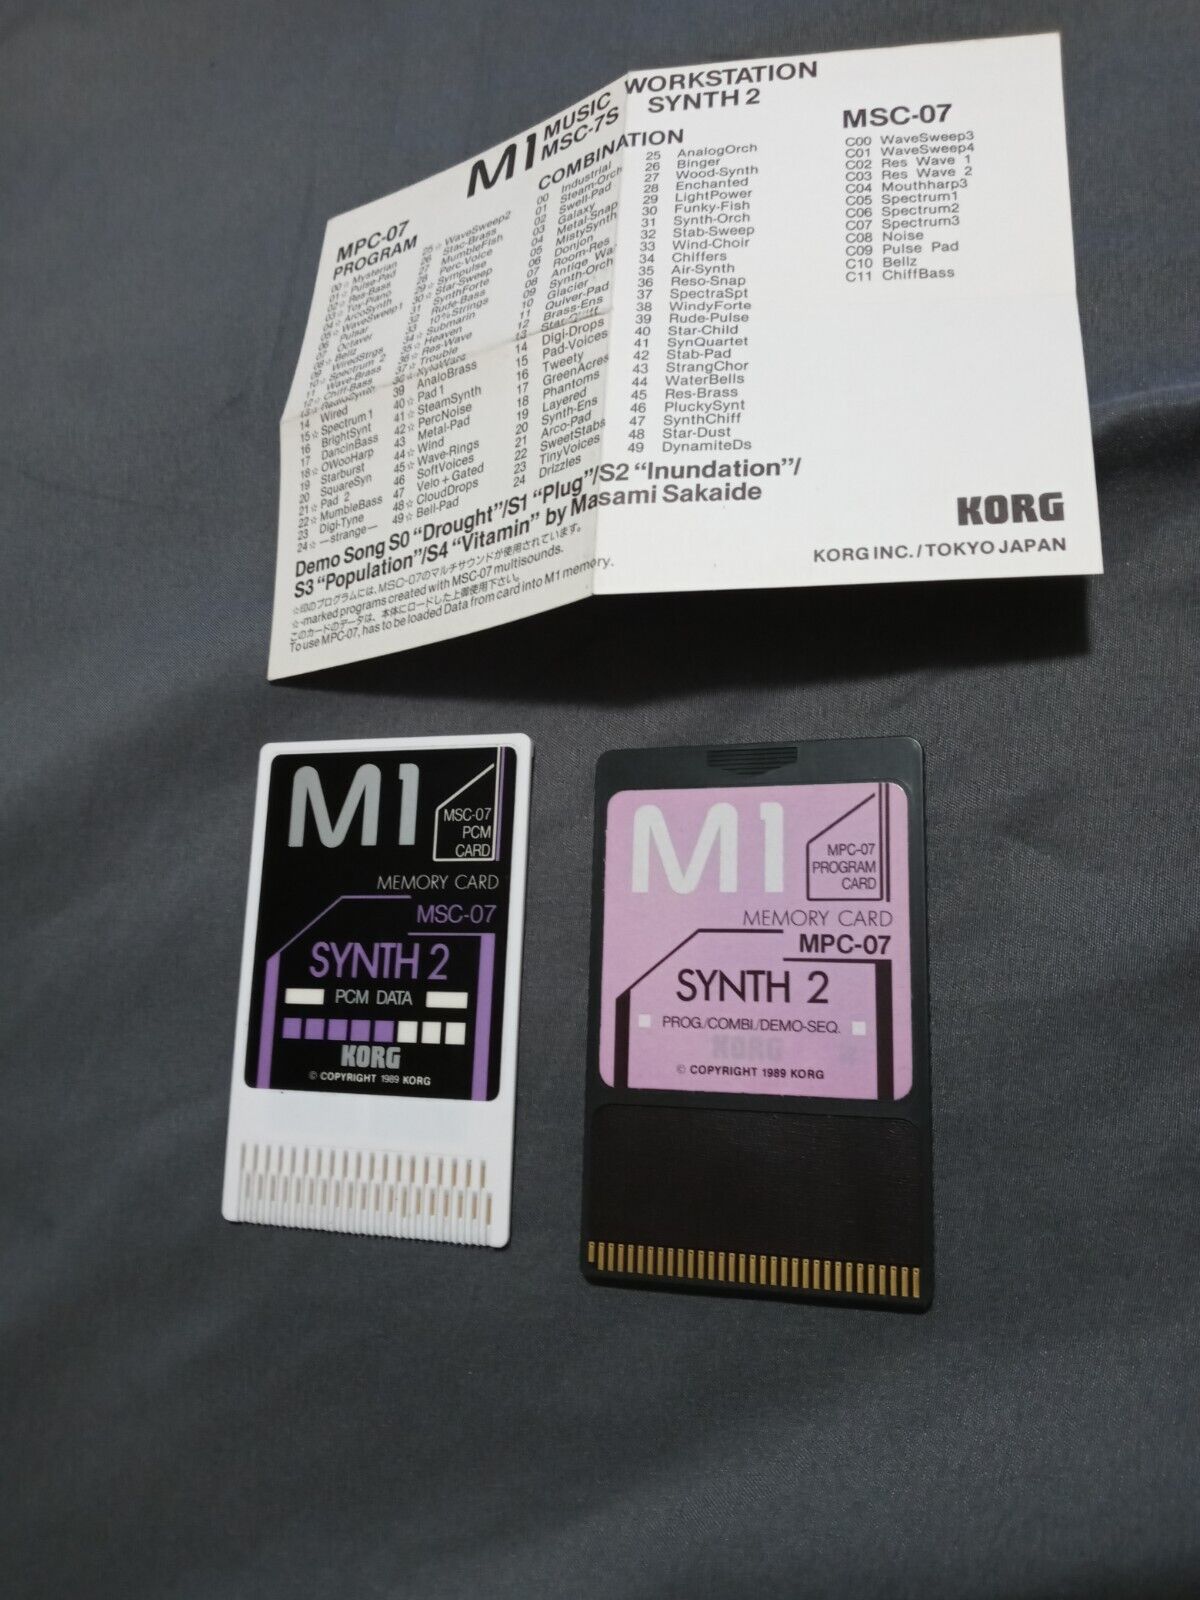 Korg M1 Synthesizer Mpc-07 Msc-07 Synth 2 Program Card & Pcm Card